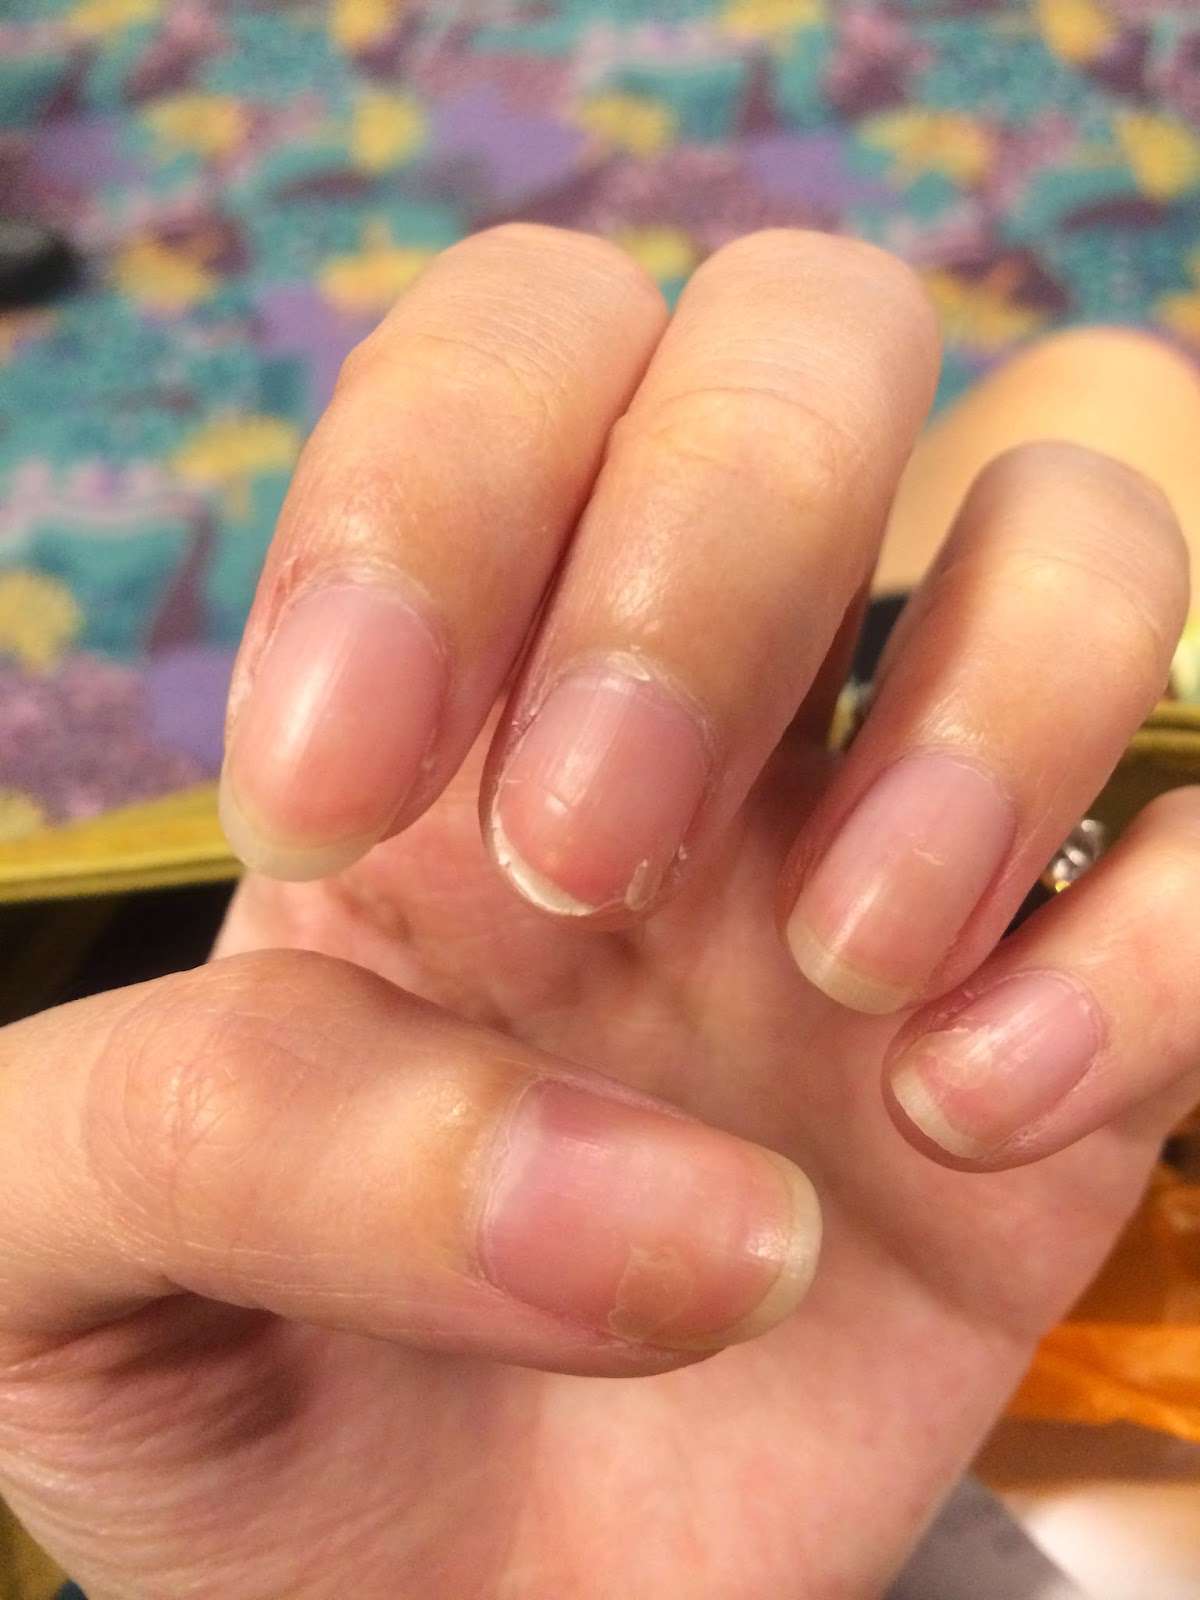 The Dettol Diaries: Peeling Fingernails after HFMD